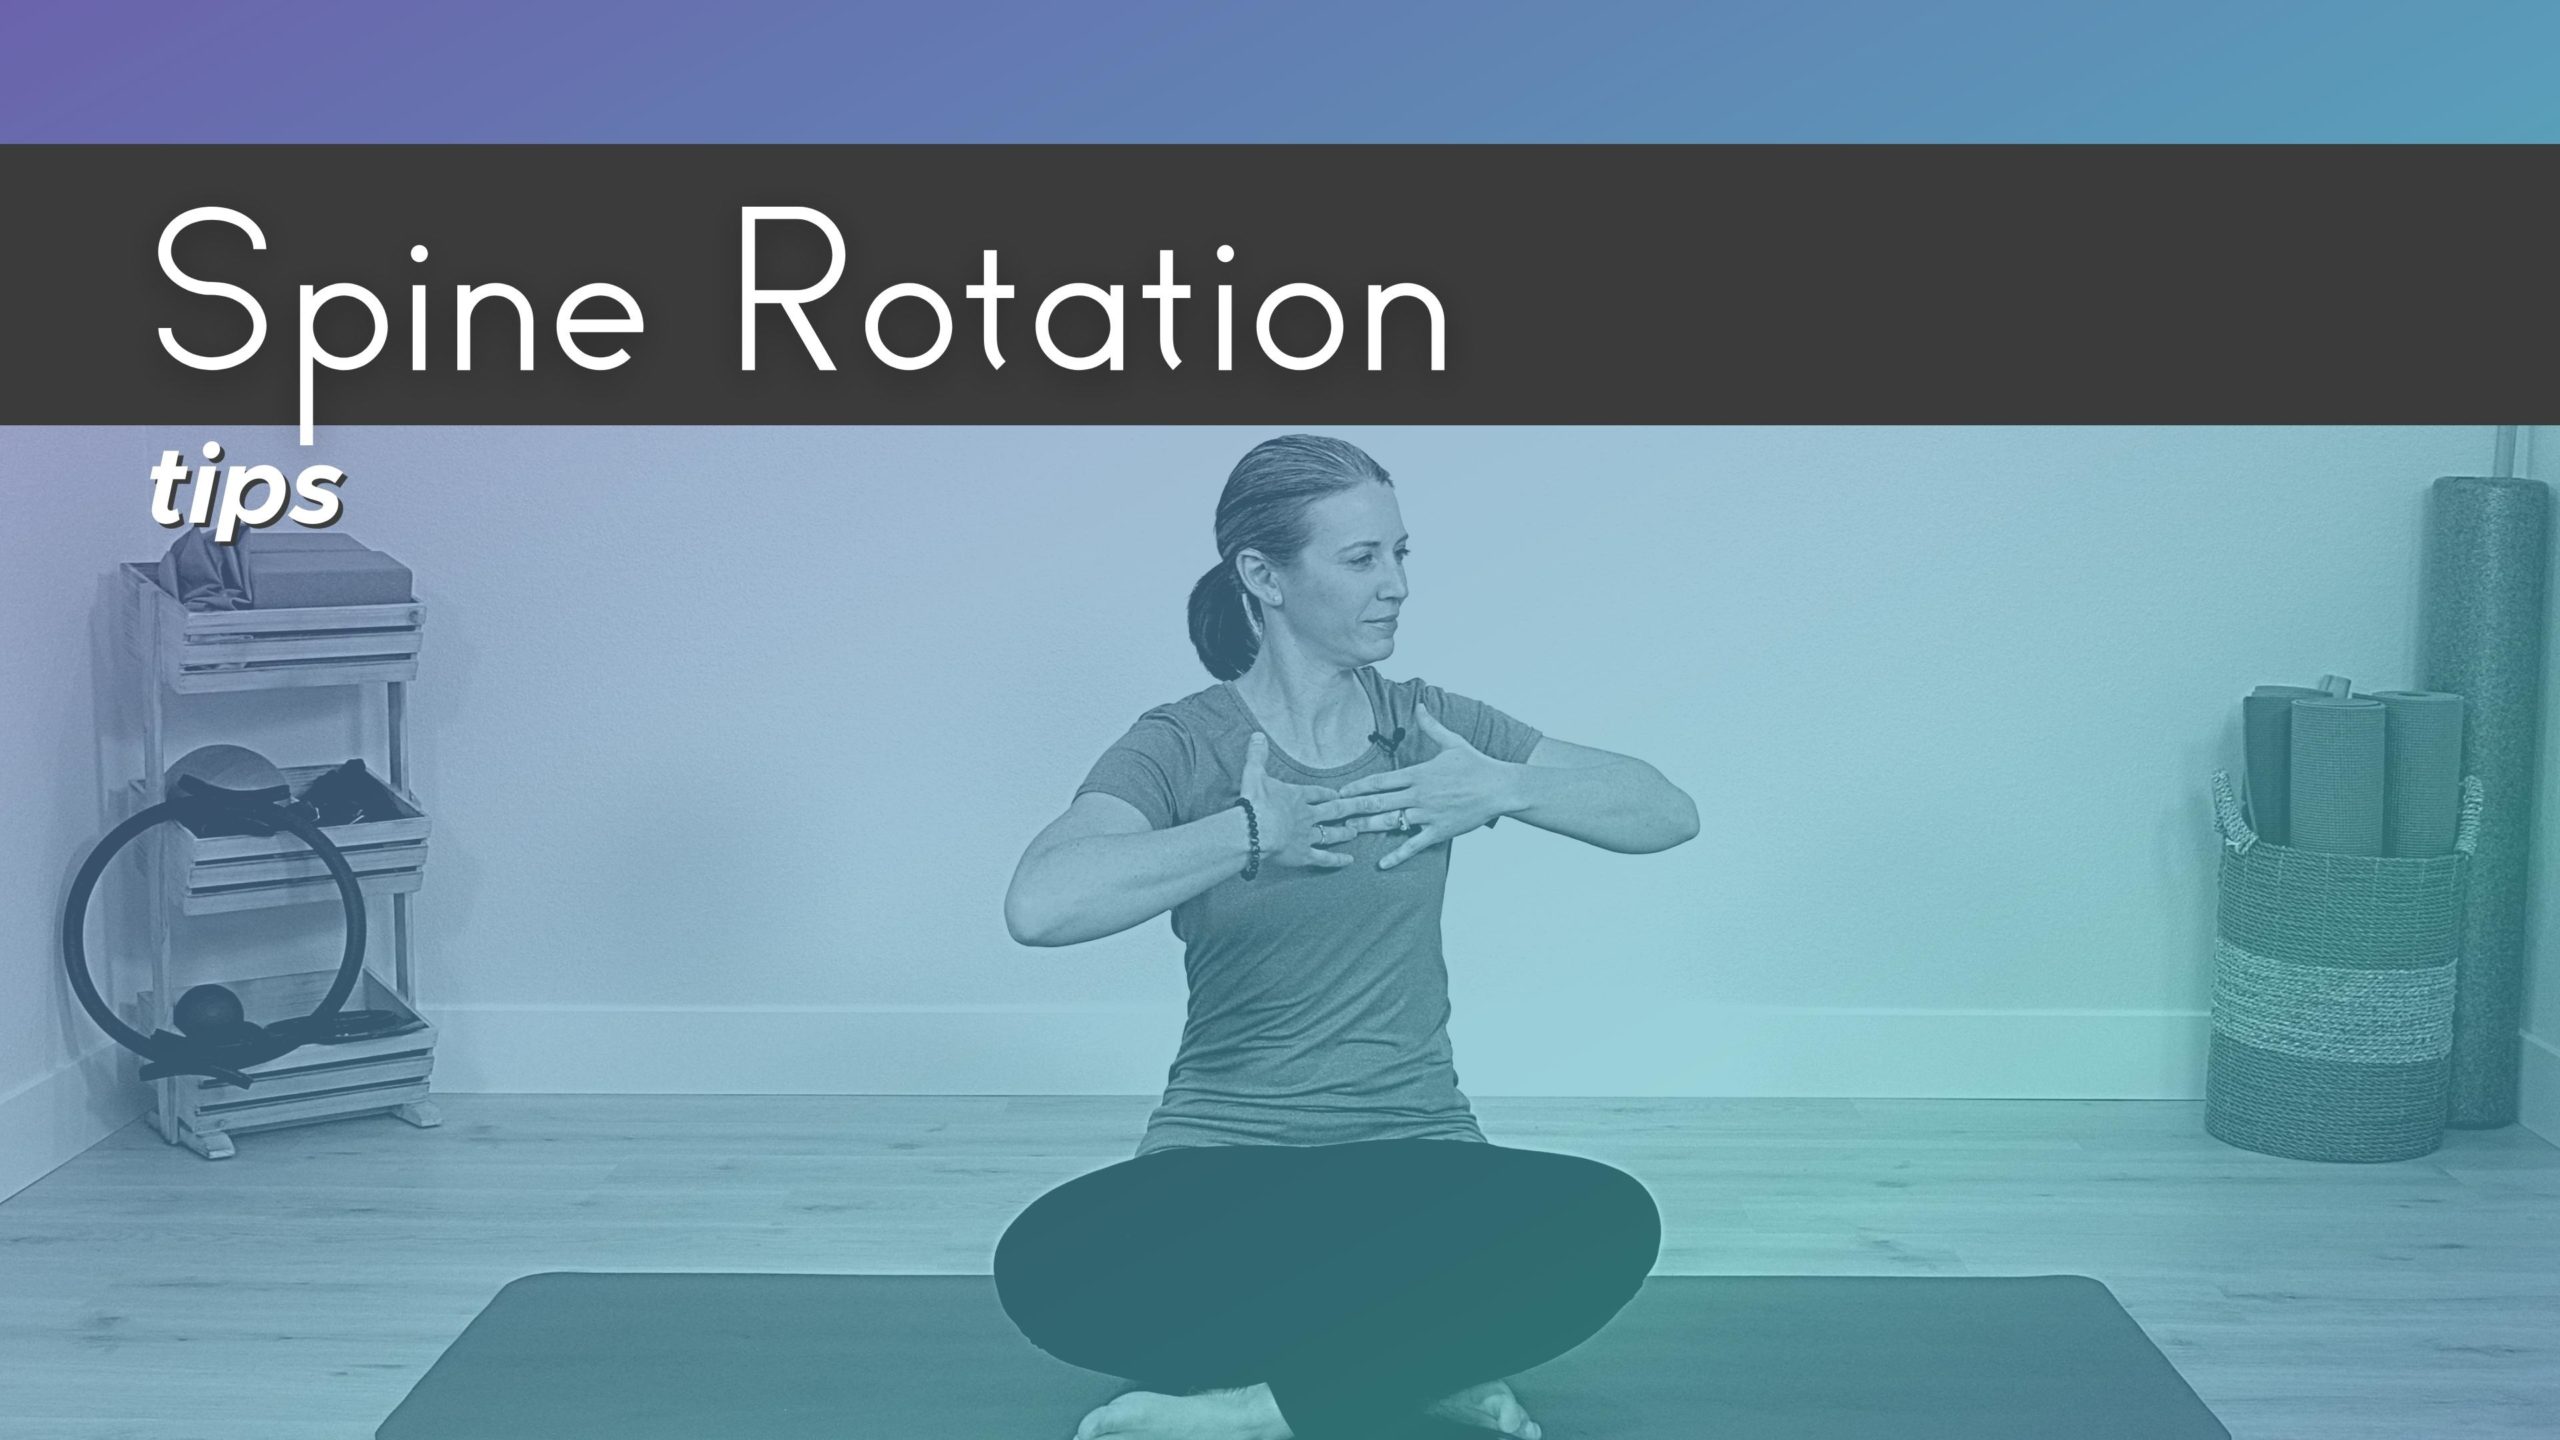 Spine Rotation Tips